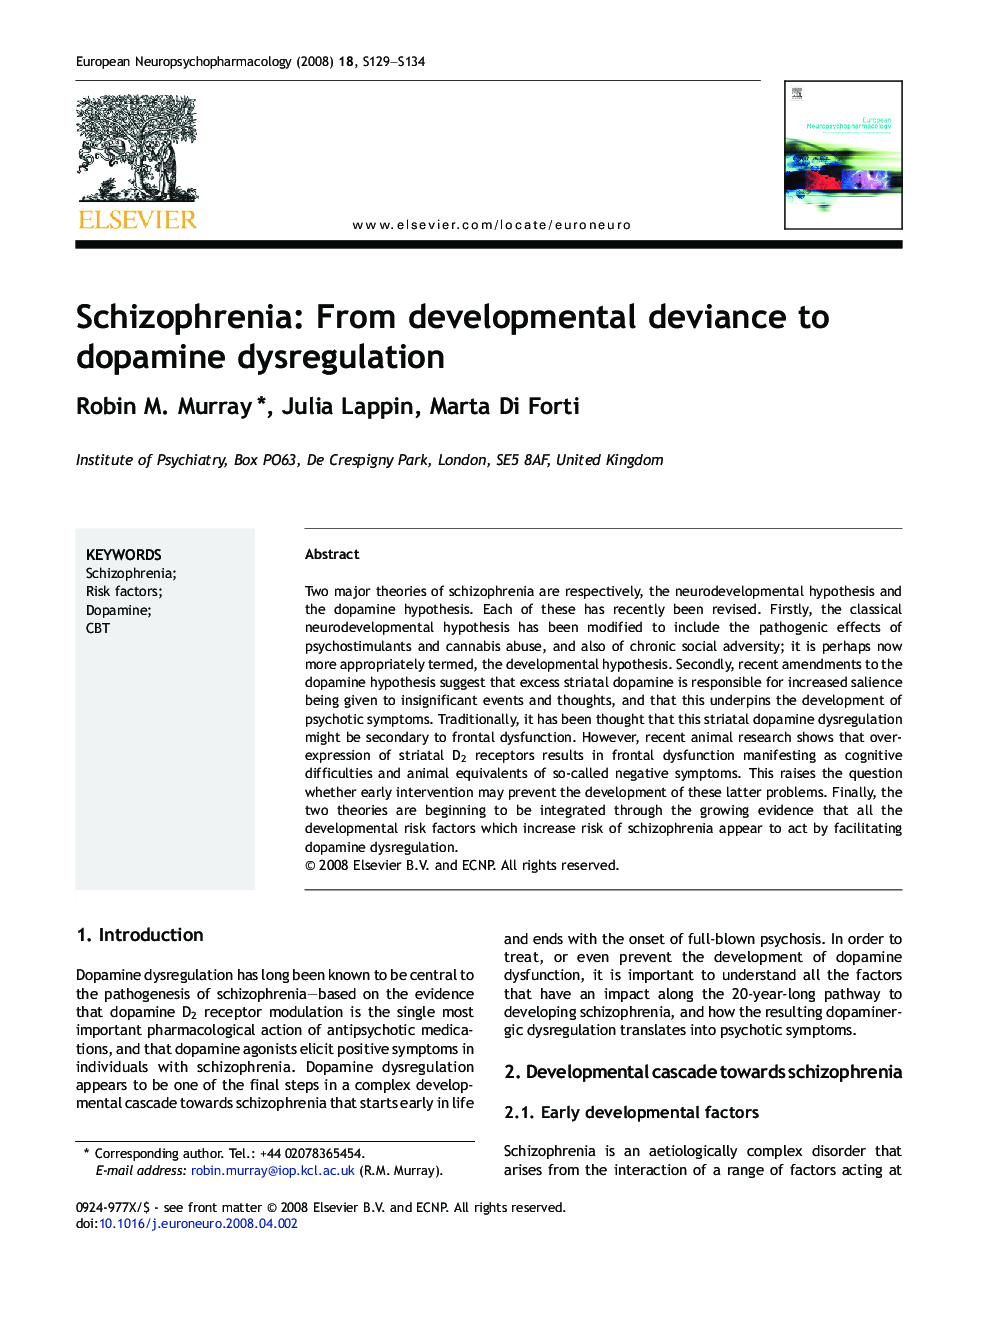 Schizophrenia: From developmental deviance to dopamine dysregulation